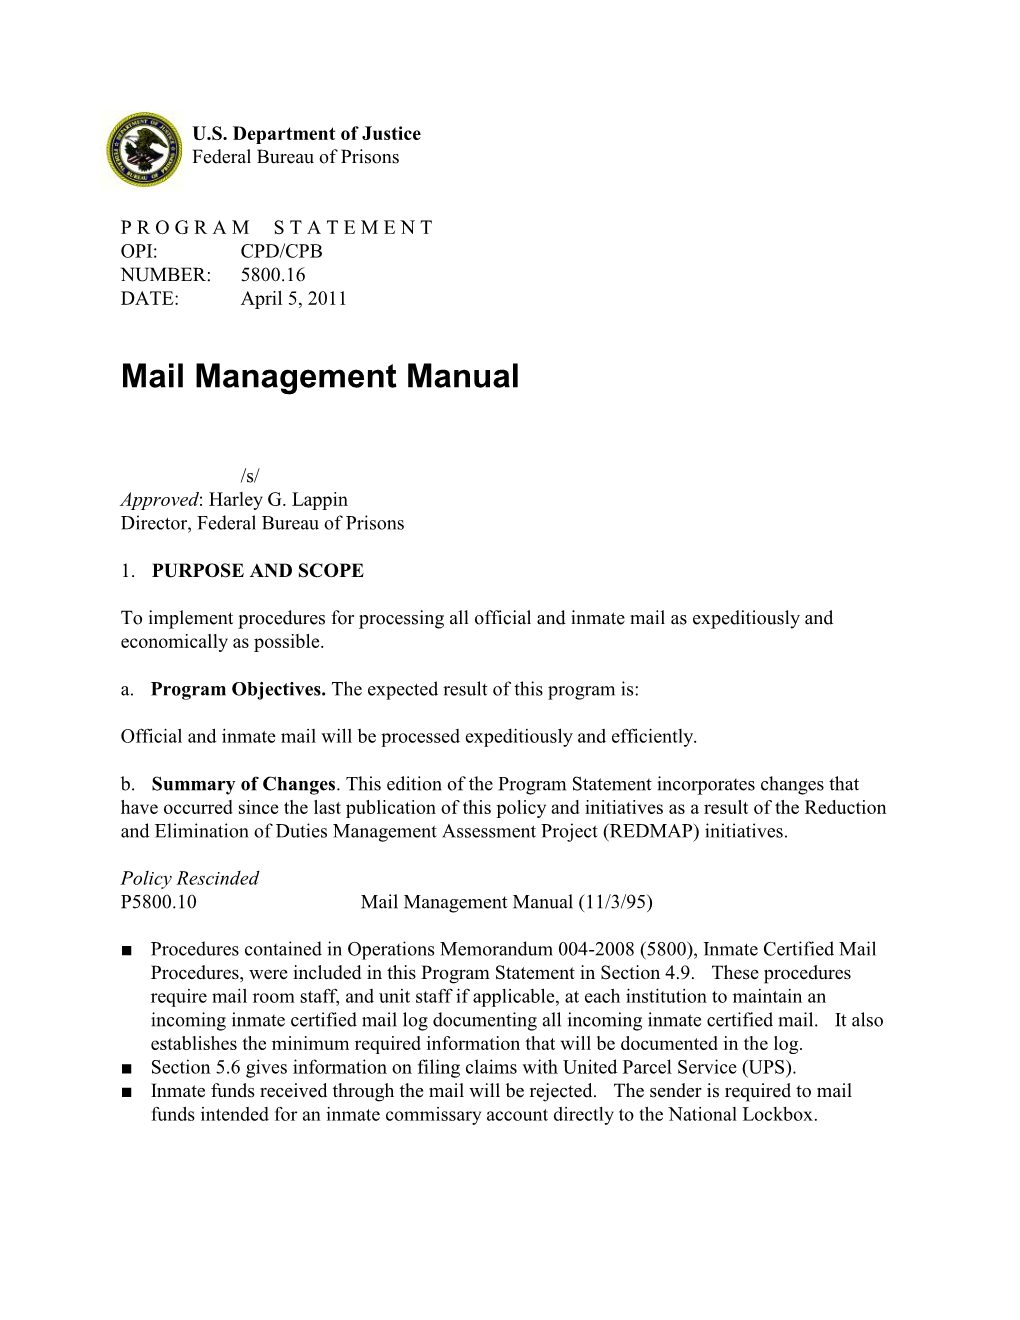 Mail Management Manual